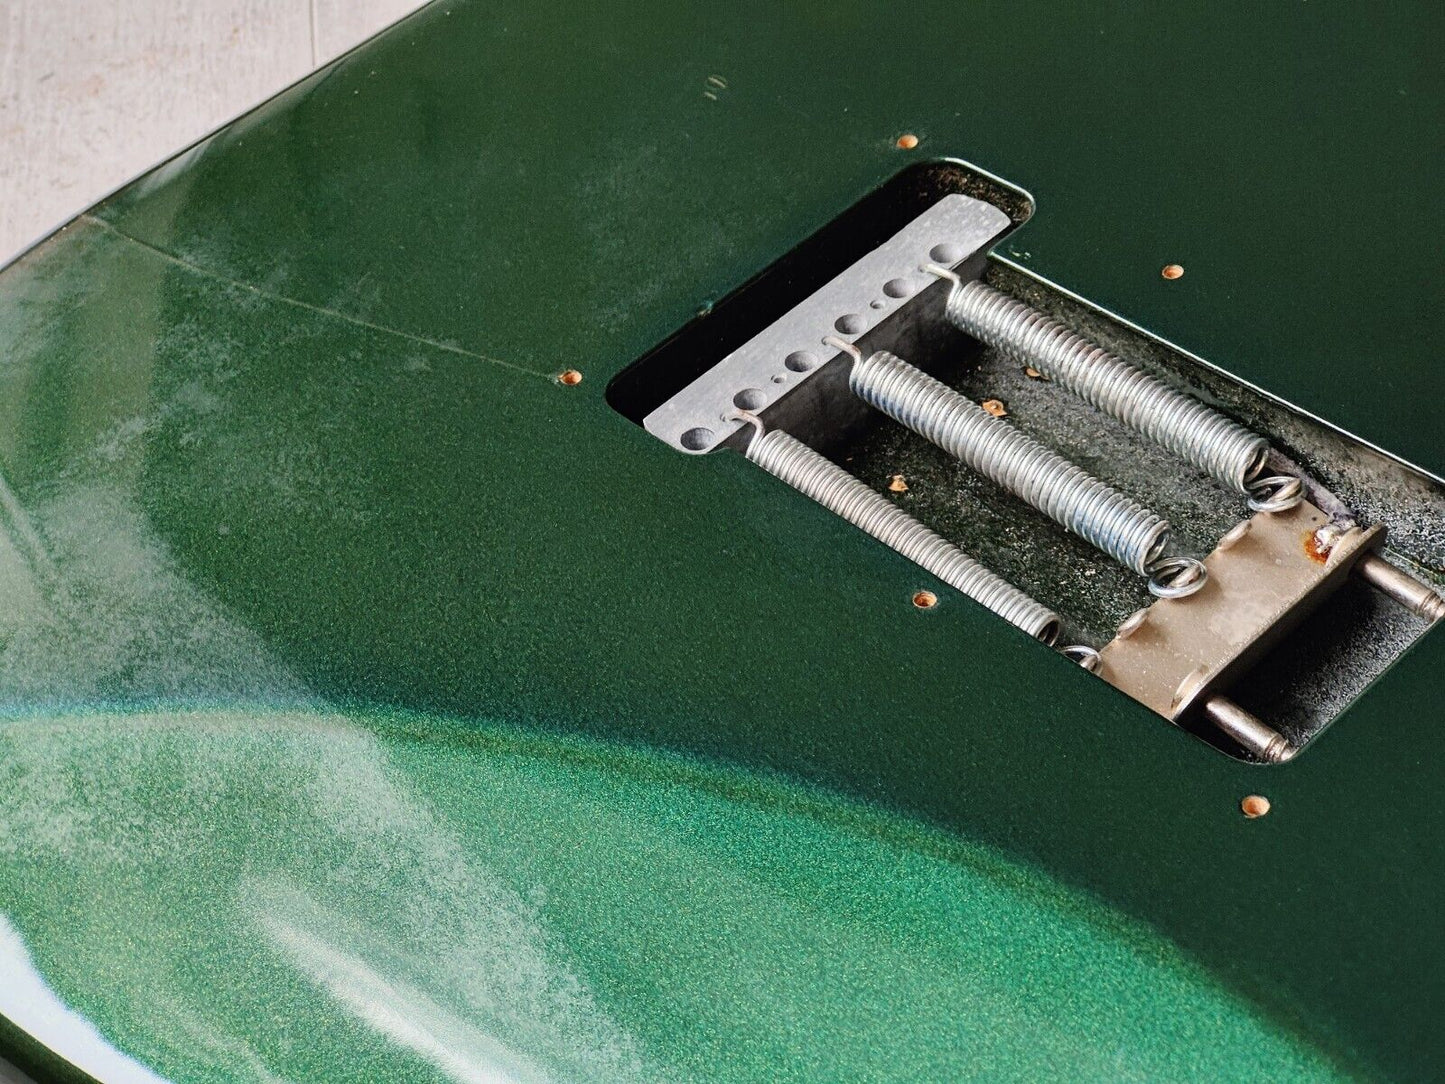 1991 Fender Japan ST-500VR Stratocaster (Emerald Green)